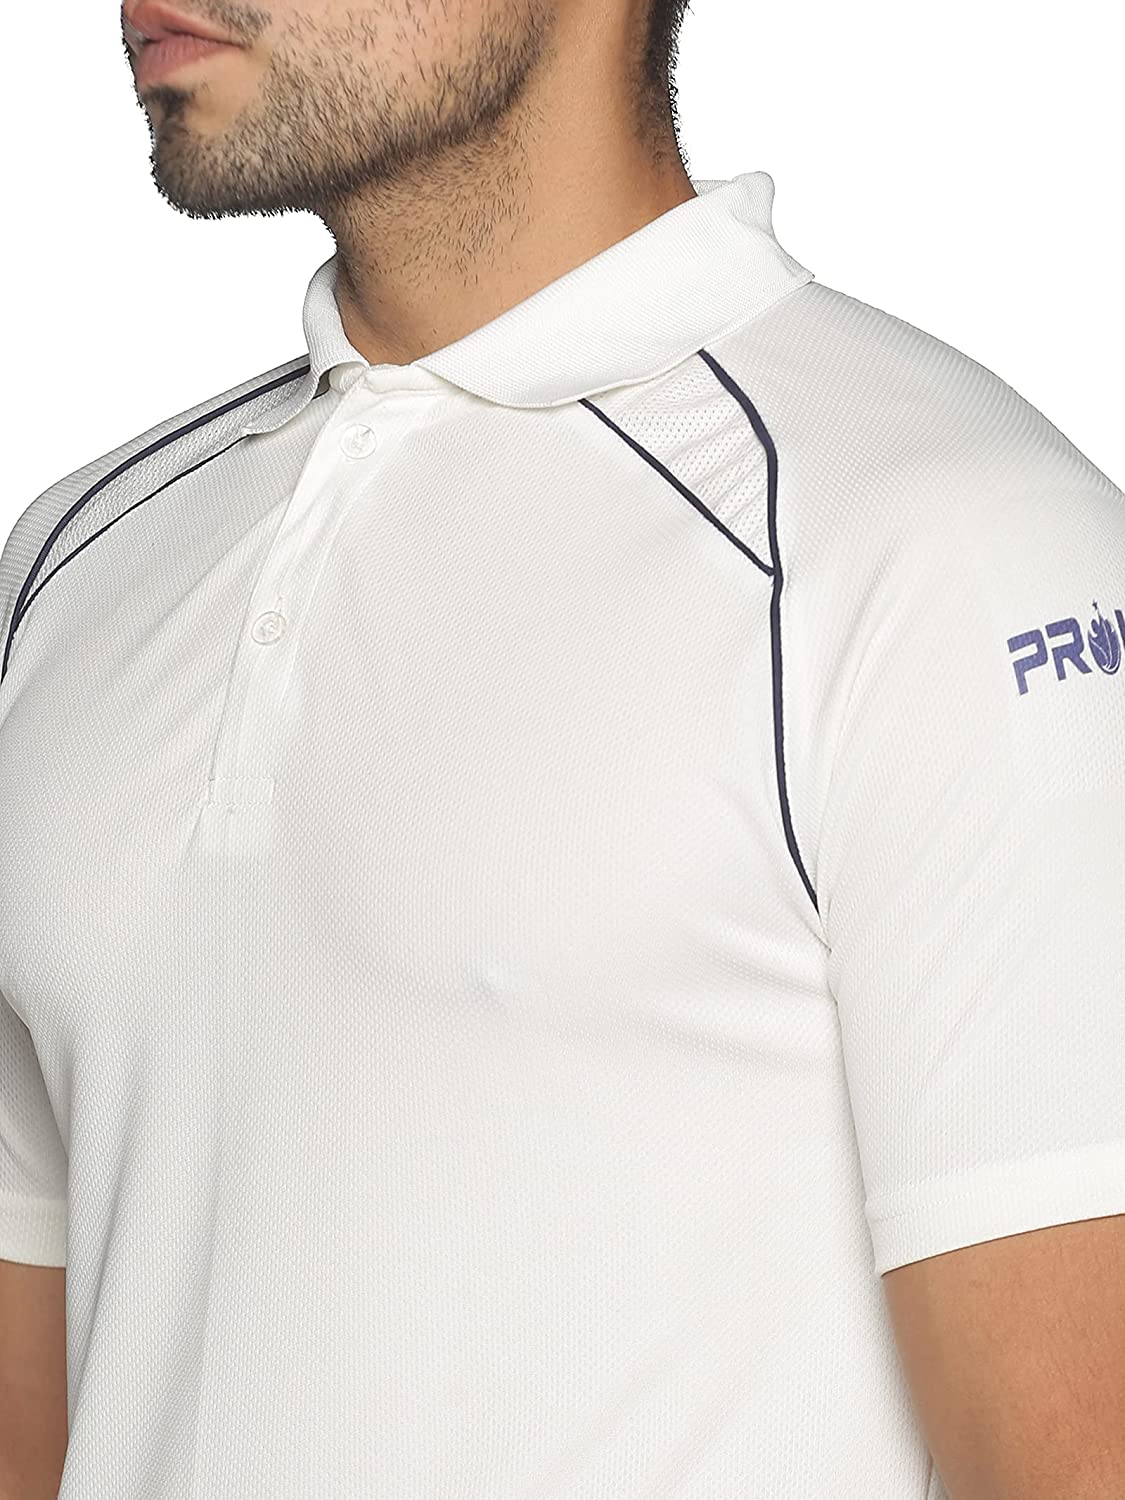 Prokick Cricket White T-Shirt and Trouser Set - Best Price online Prokicksports.com